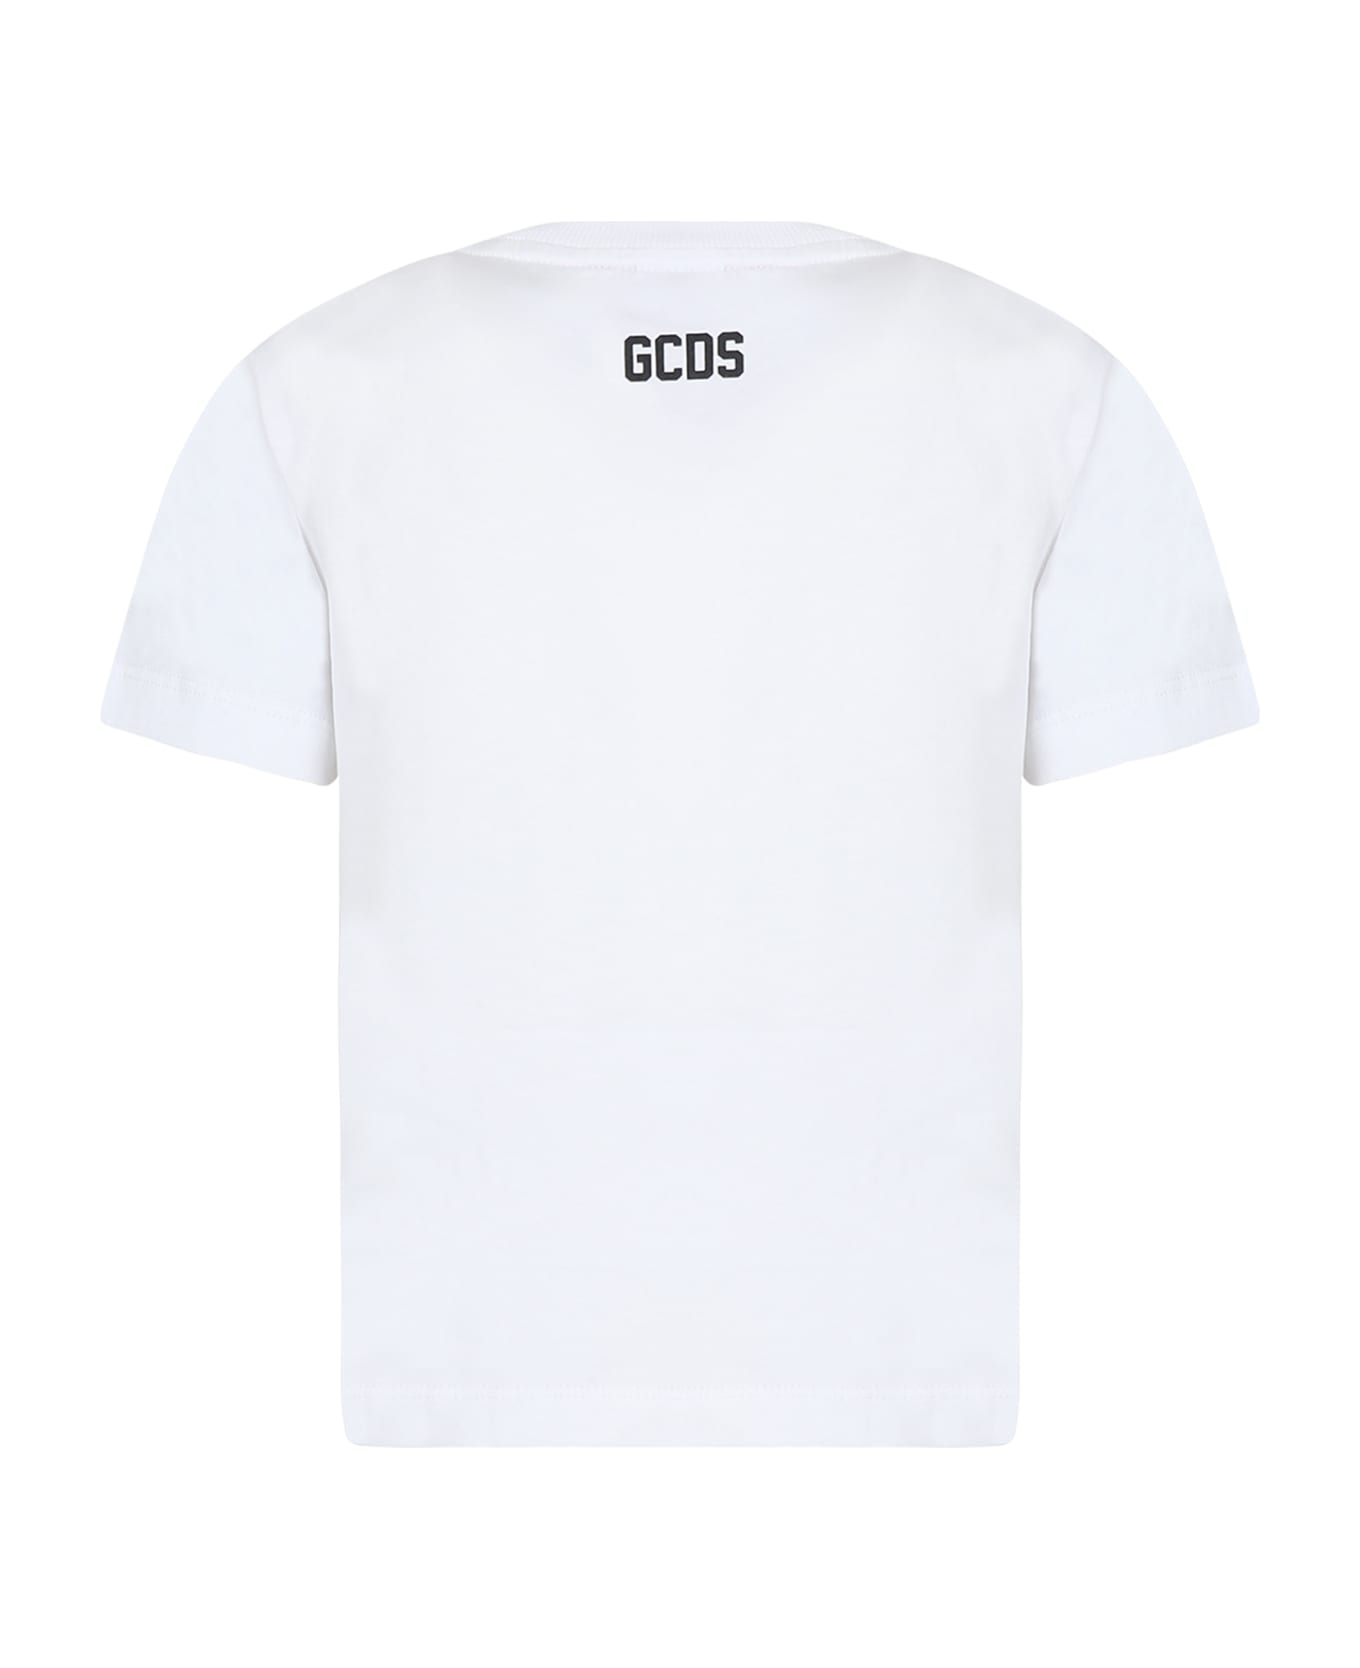 GCDS Mini White T-shirt For Boy With Logo - White